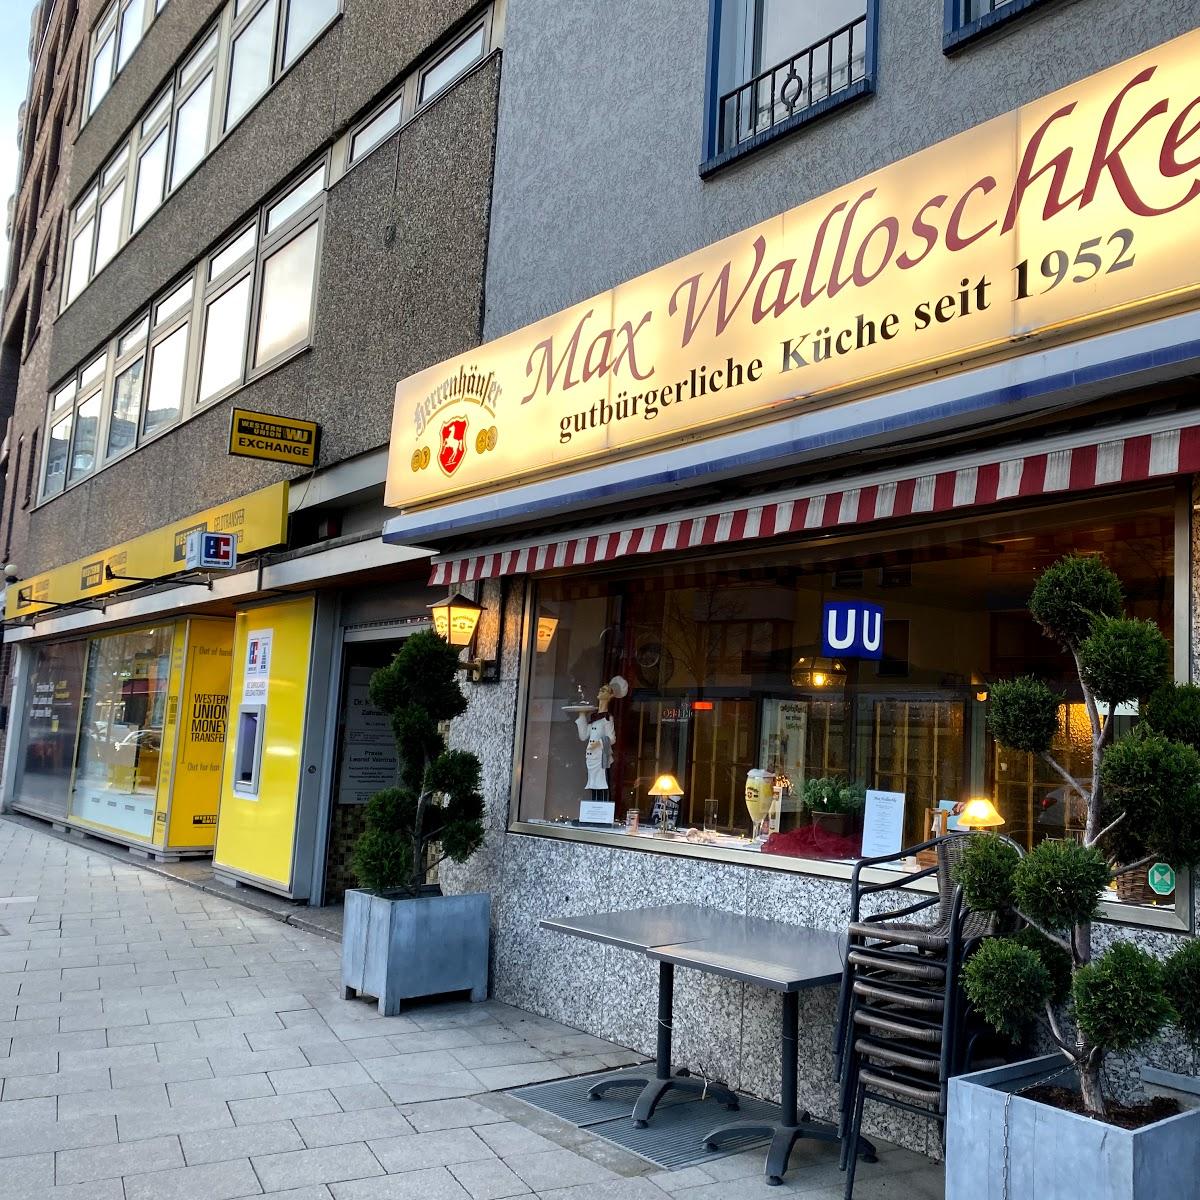 Restaurant "Max Walloschke" in  Hannover